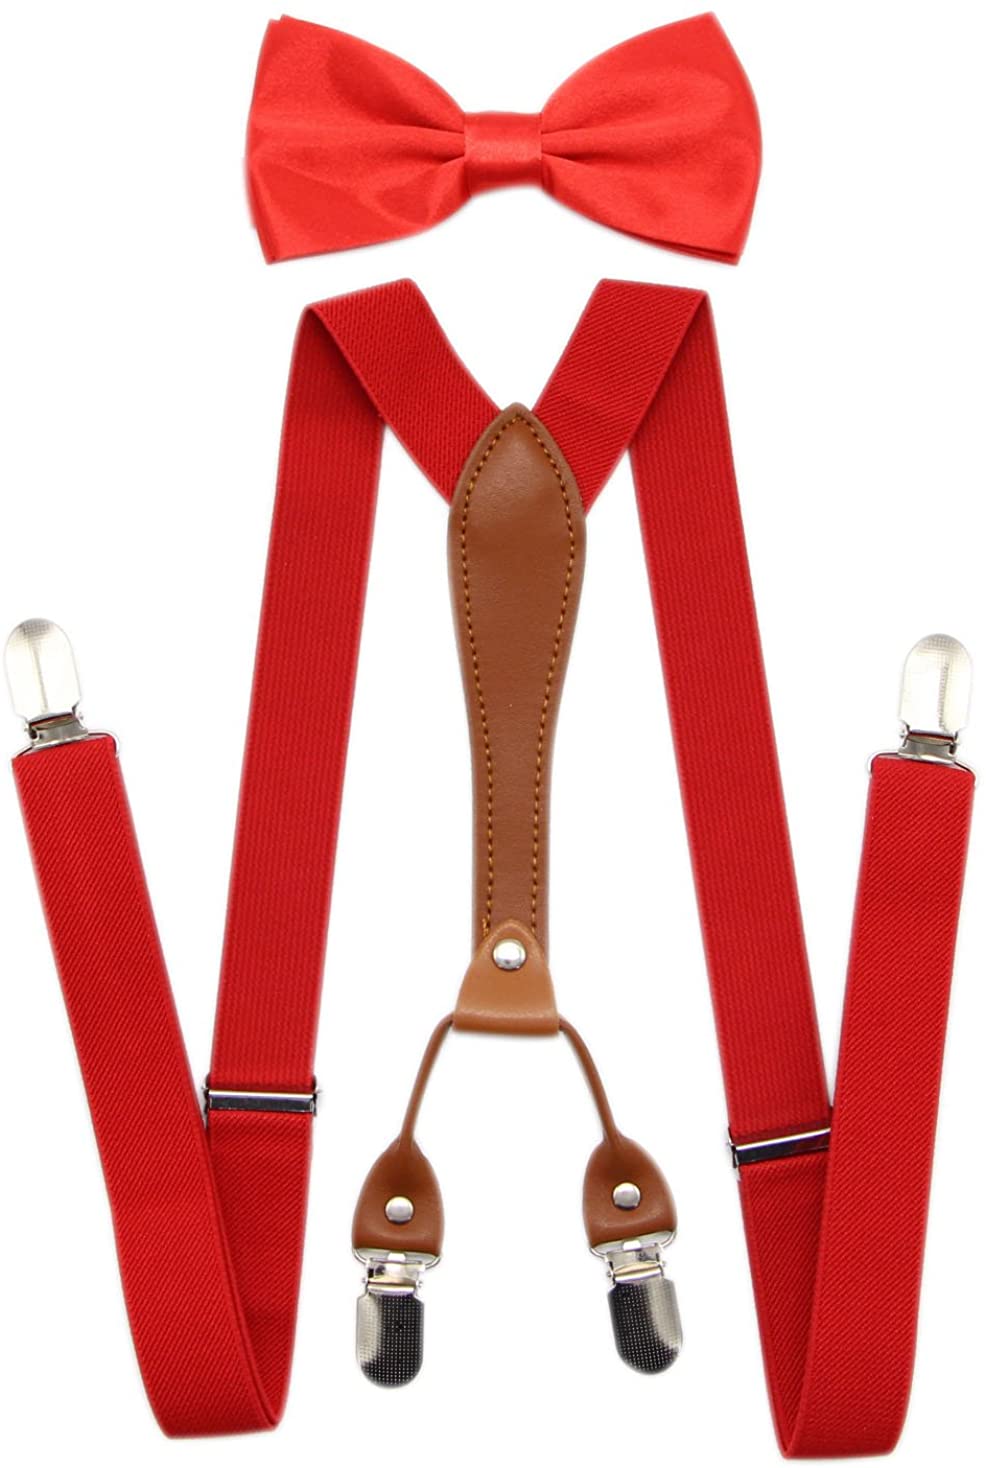 JAIFEI Suspenders & Bowtie Set- Men's Elastic X Band Suspenders + Bowtie  For Wed